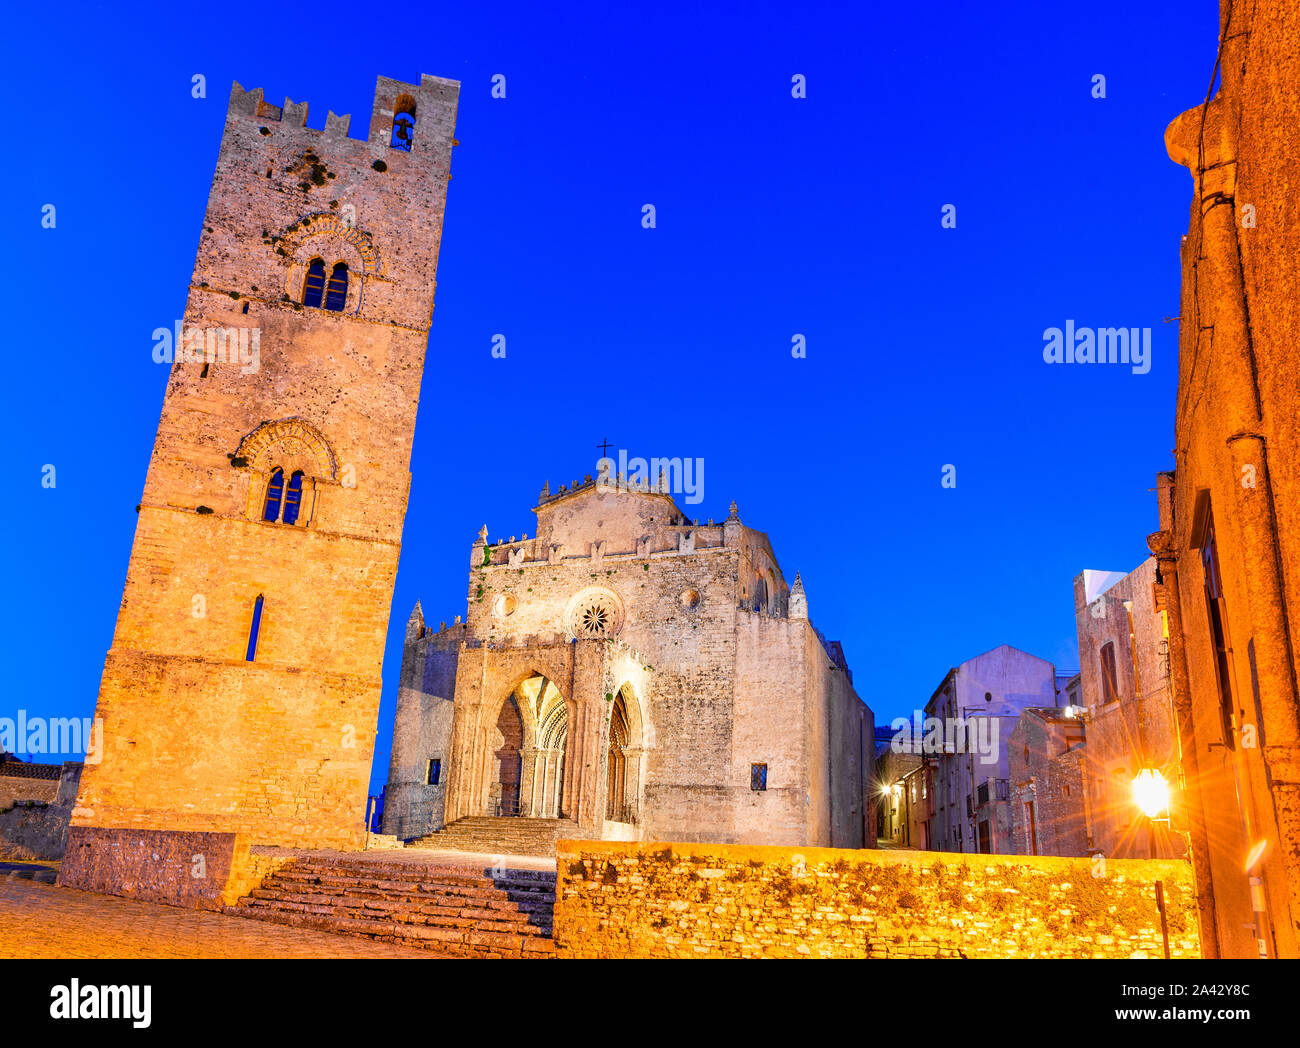 Erice, Sicilia, Italia: Duomo dell'Assunta o Chiesa Madre Iglesia principal de la ciudad medieval de Erice, Europa Foto de stock